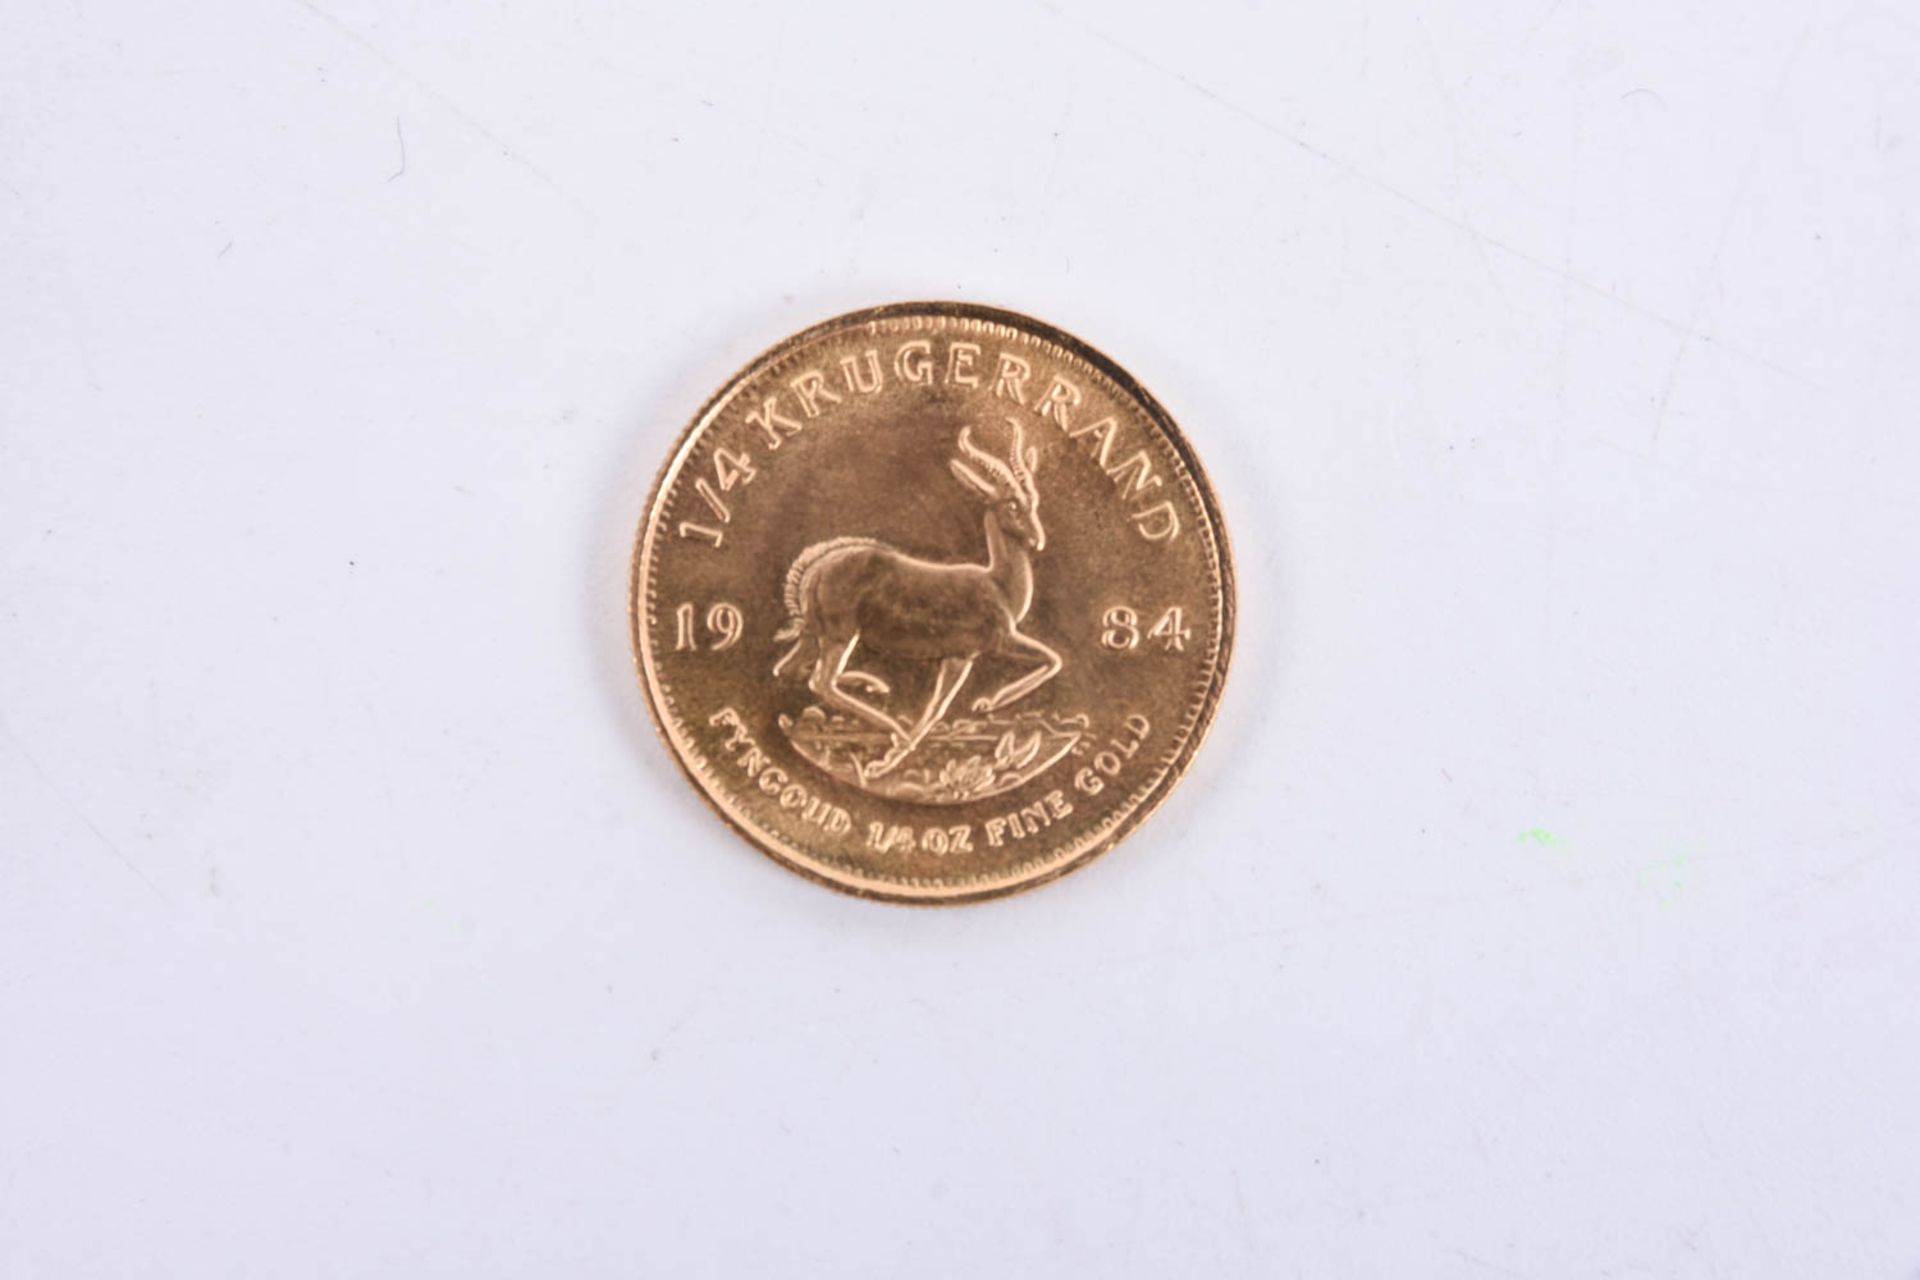 Südafrika ¼ Krügerrand, 1984 Goldmünze